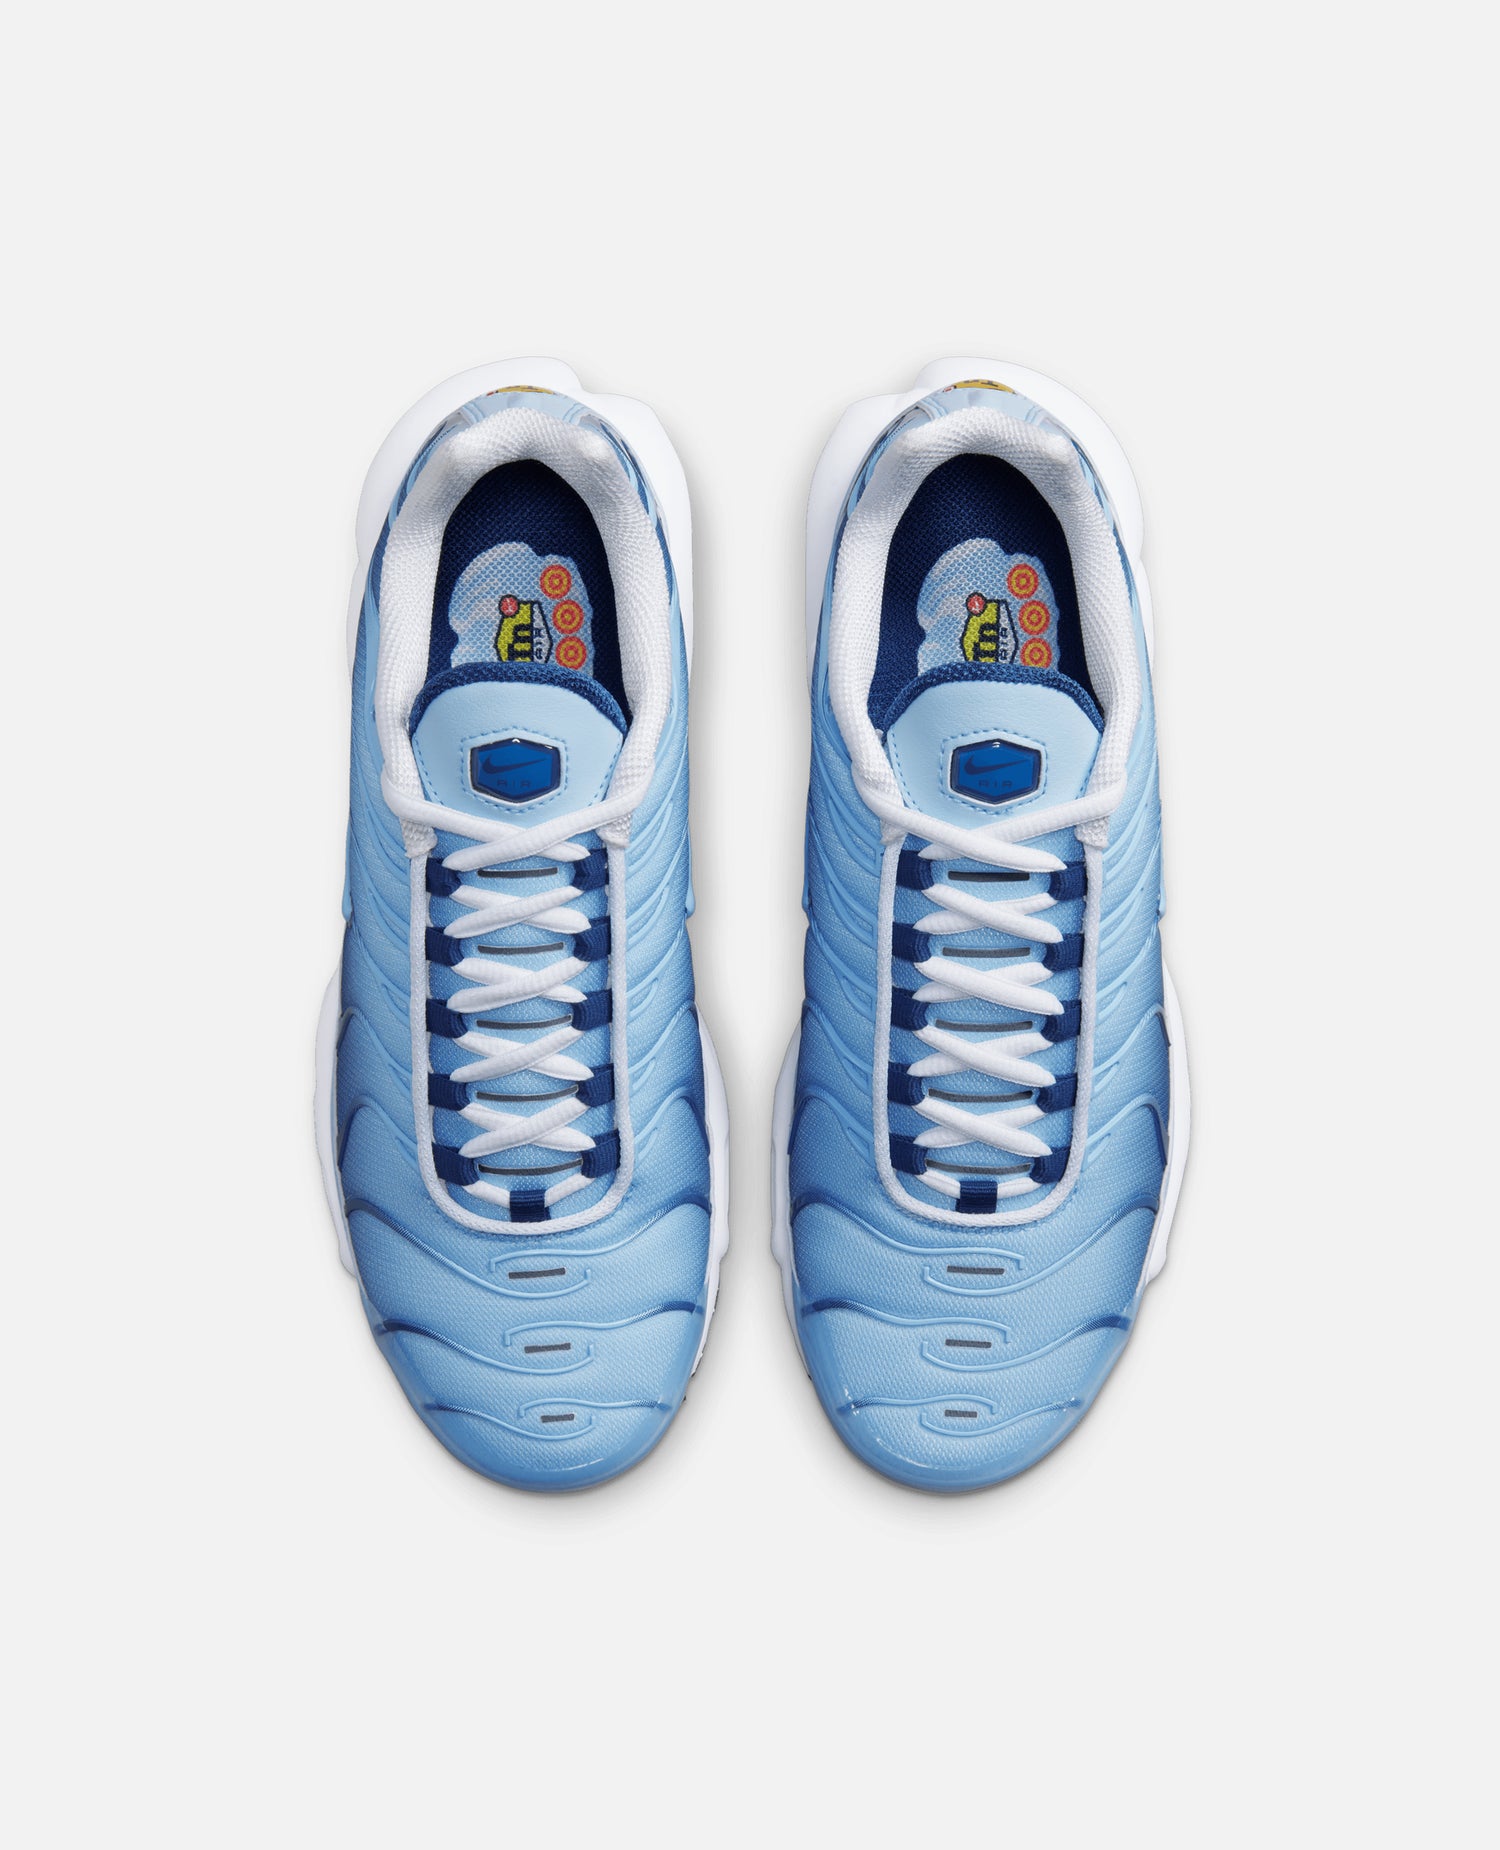 WMNS Nike AIR Max Plus (Maui/Celestine Blue-Diffused Blue)